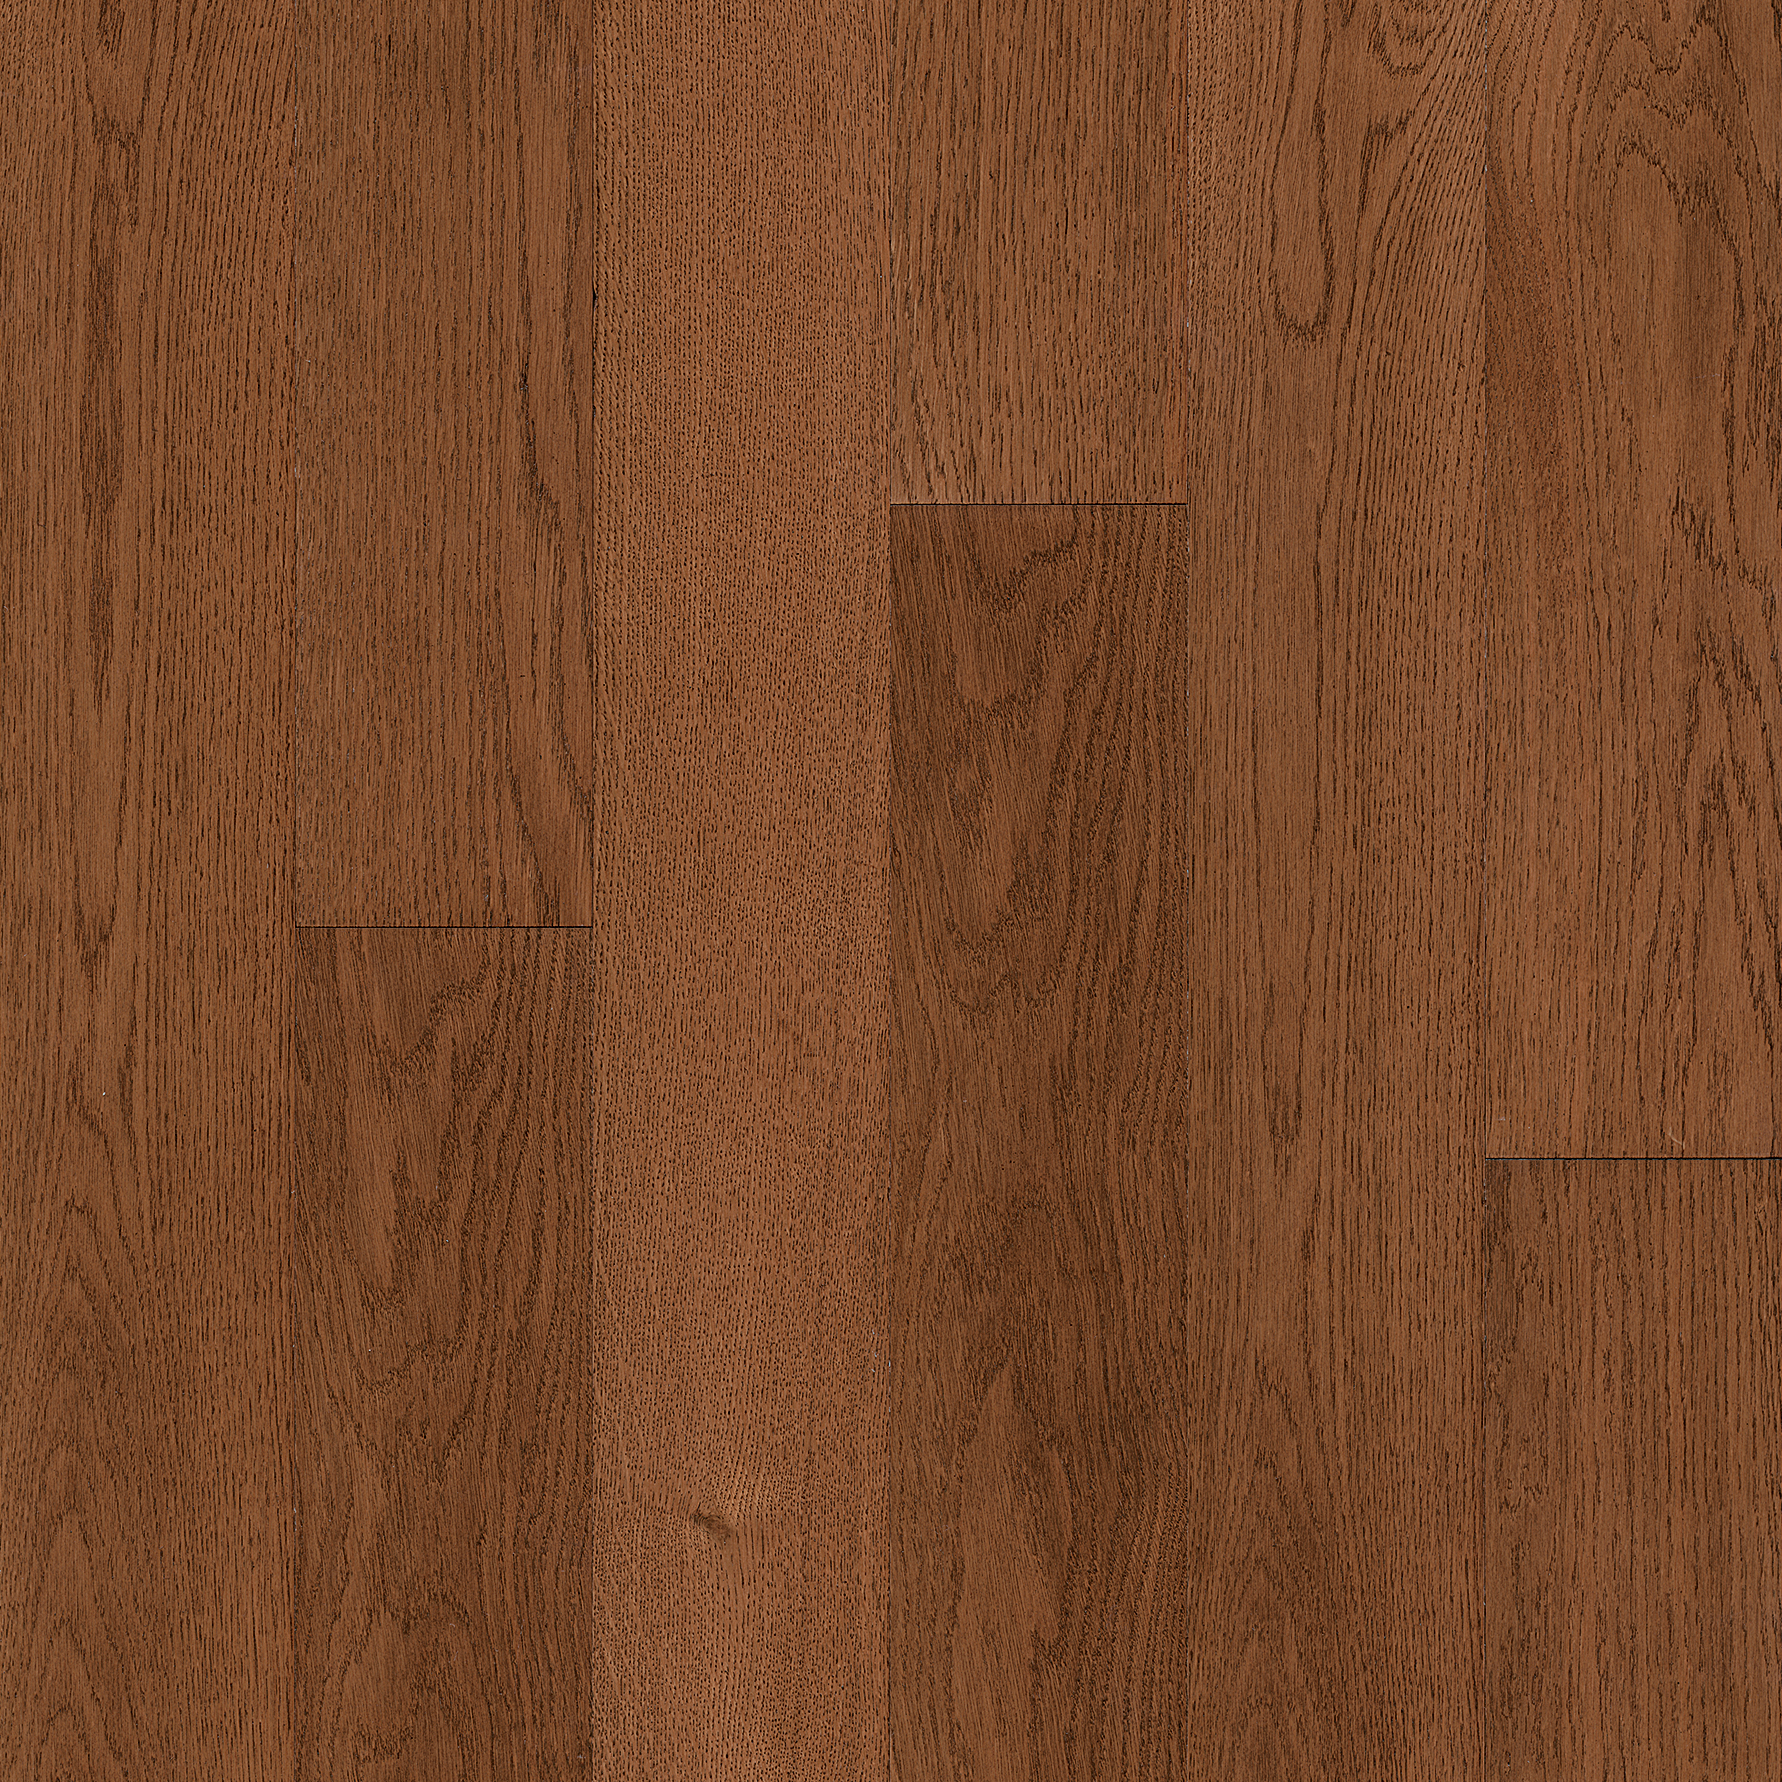 White Oak Engineered Hardwood Ekwr54l30s, Hardwood Flooring Warranty